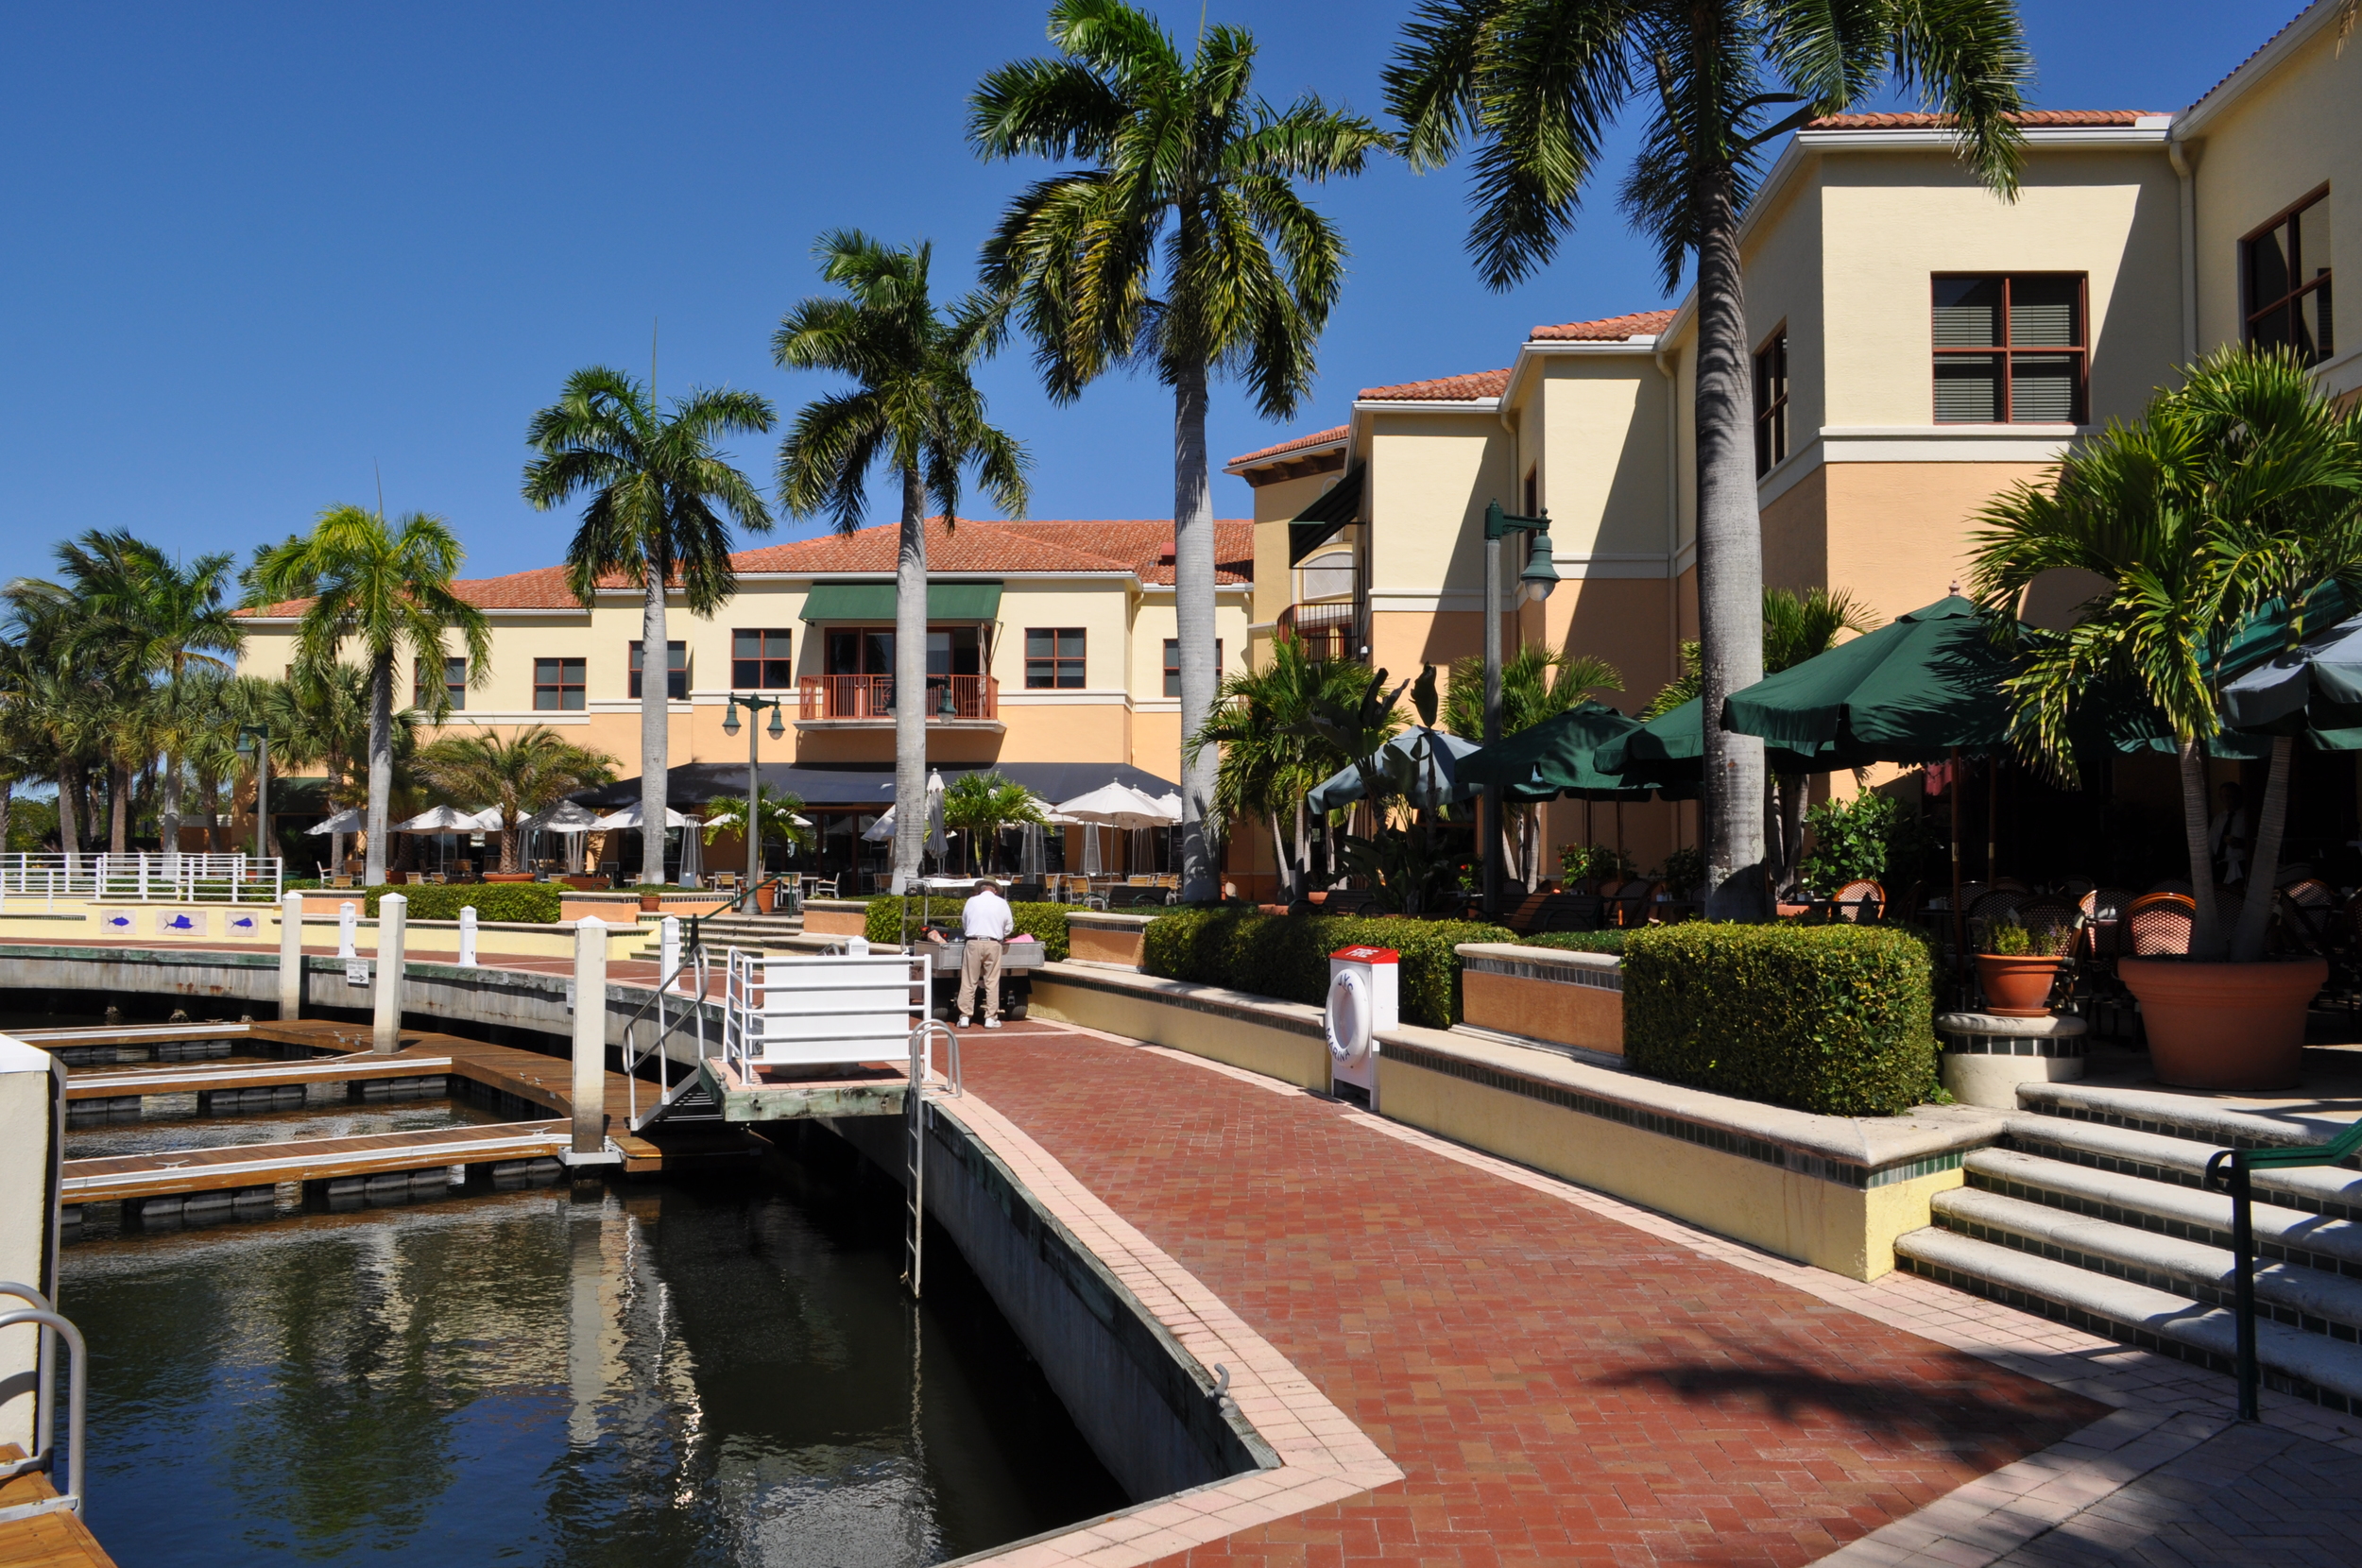 Jupiter Yacht Club Florida Riverwalk Restaurant Outdoor Seating.JPG